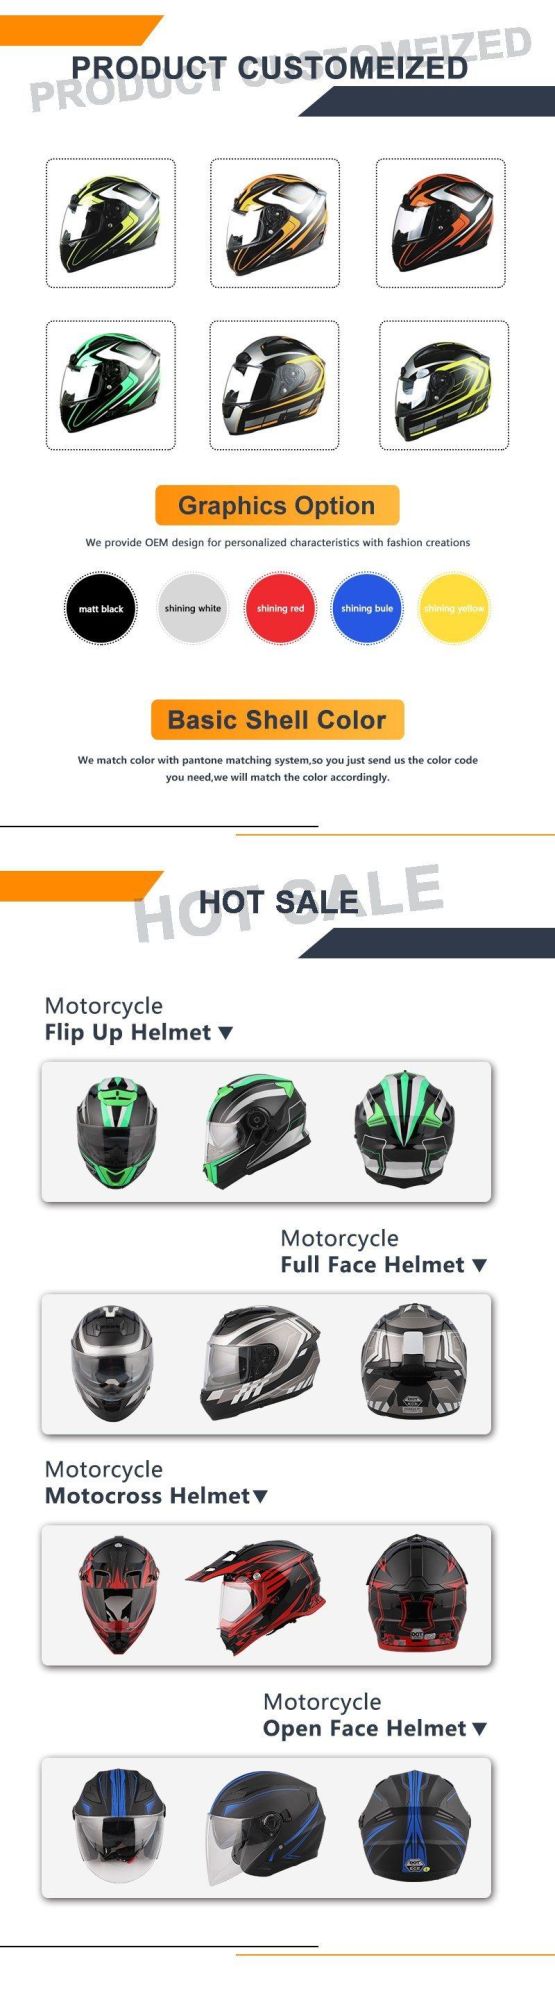 All Full Face Motorcycle Helmets Pass Safety Test Motorbike Helmet